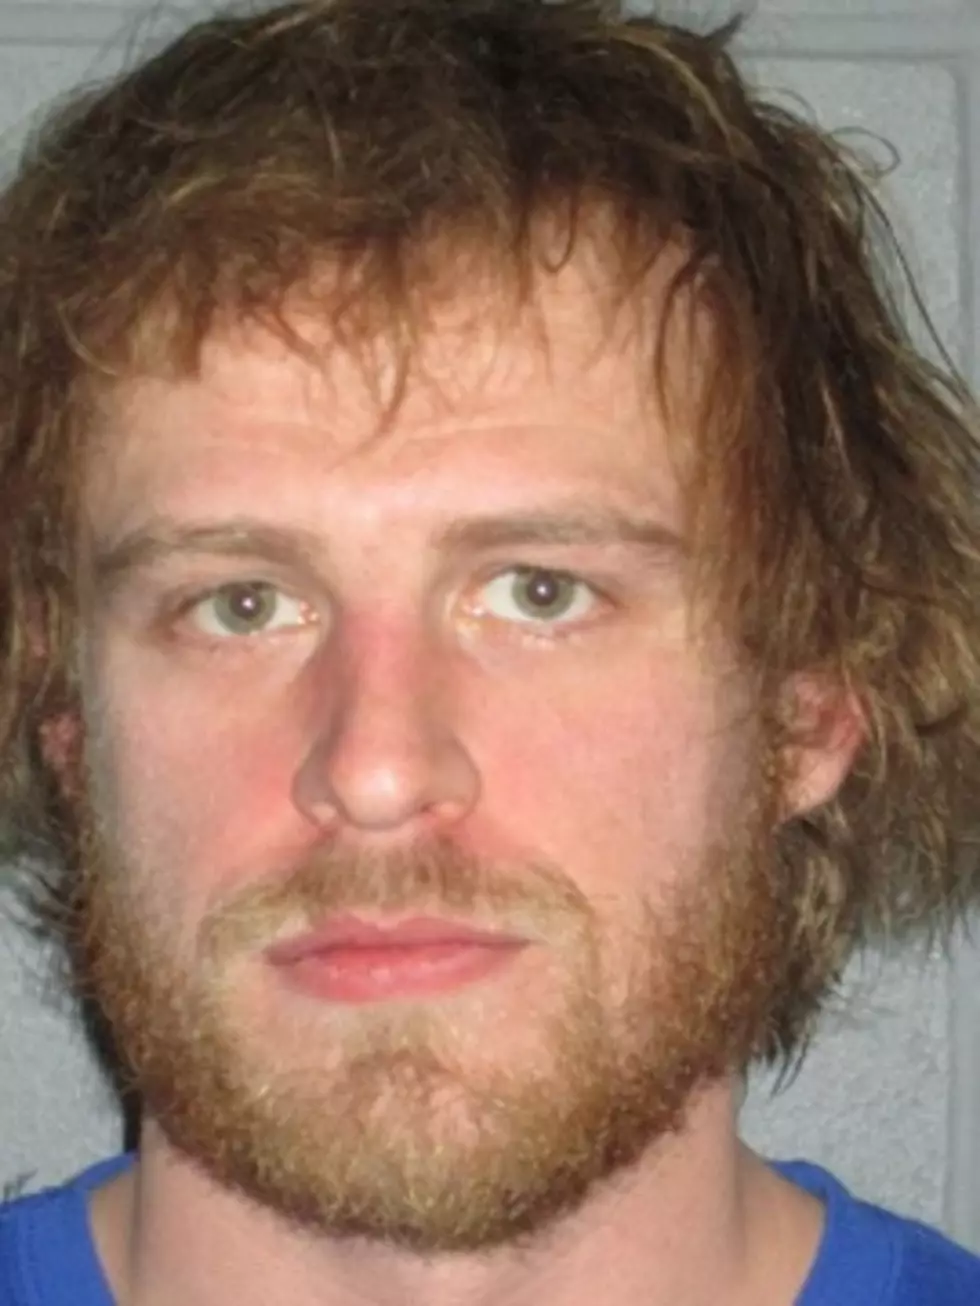 Kalispell Man Accused of Making Threats Released From Jail Last Week